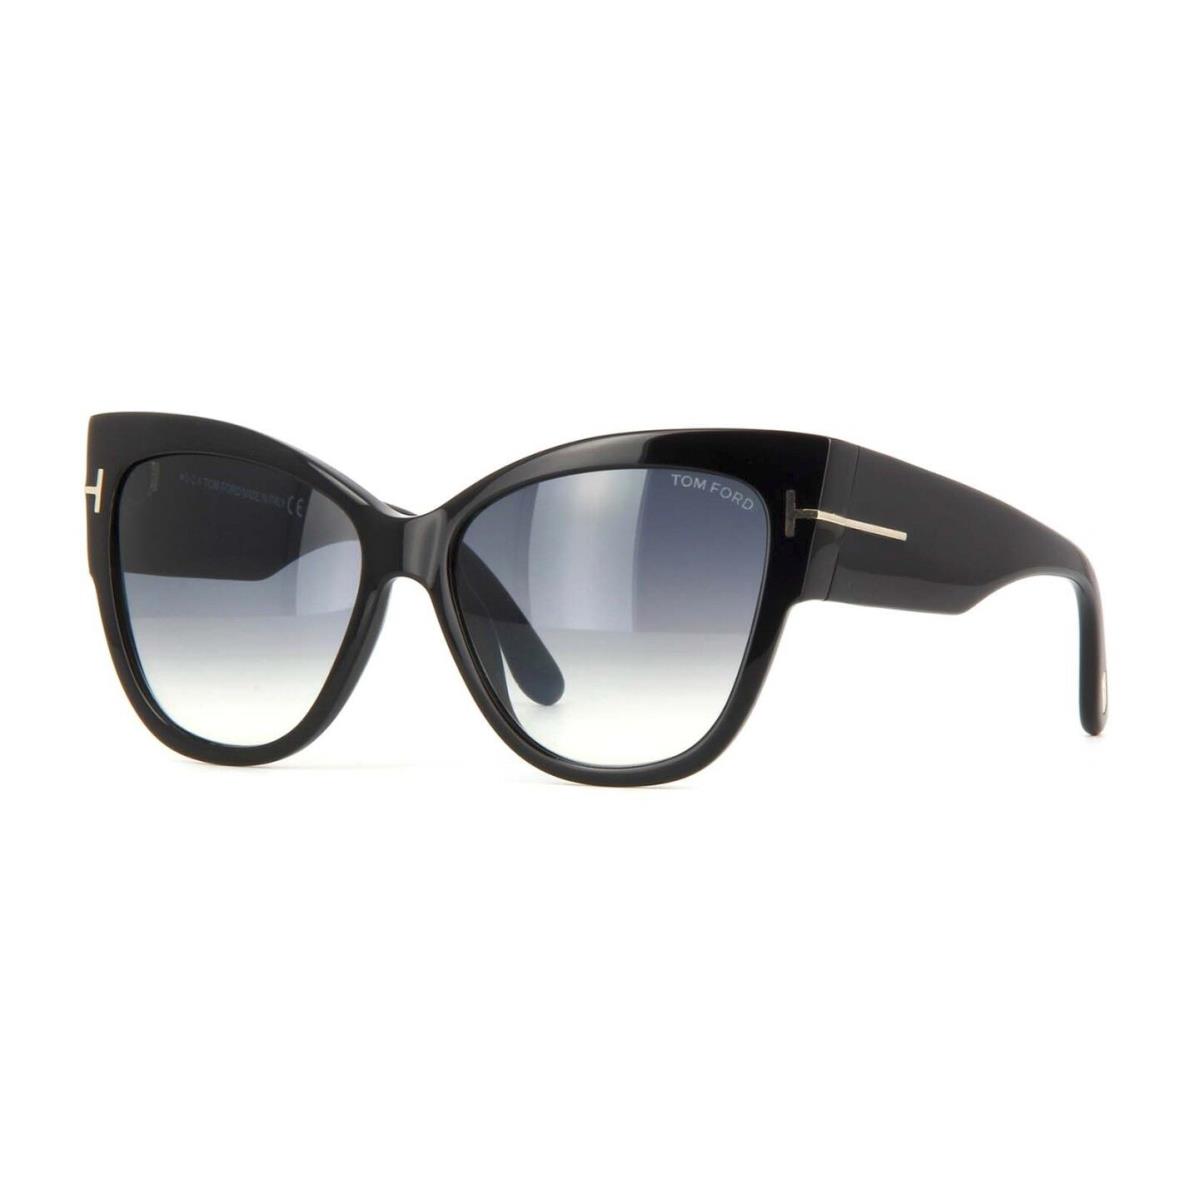 Tom Ford Anoushka FT 0371 Black/grey Shaded 01B Sunglasses - Frame: Black, Lens: Grey Shaded